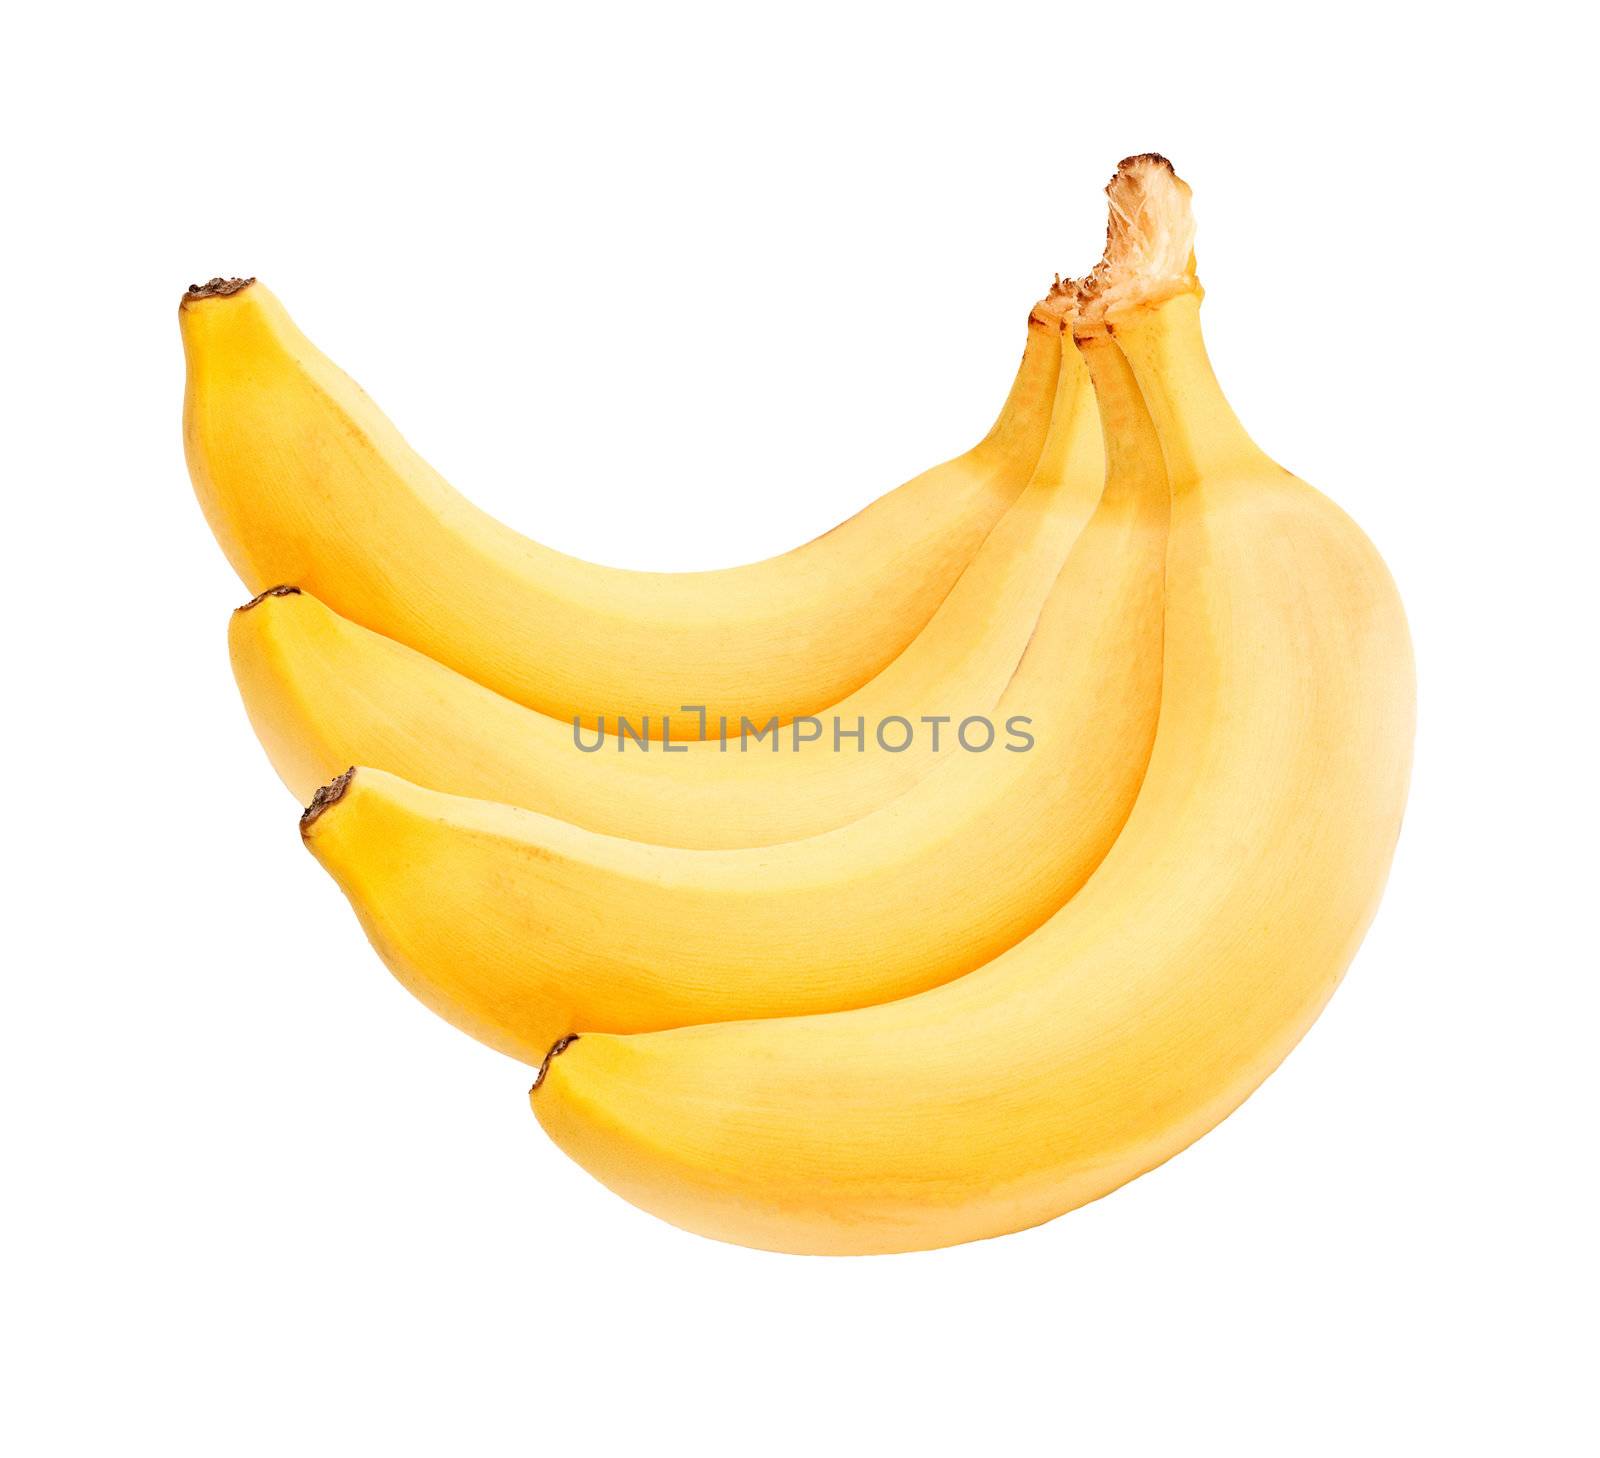 bananas by schankz